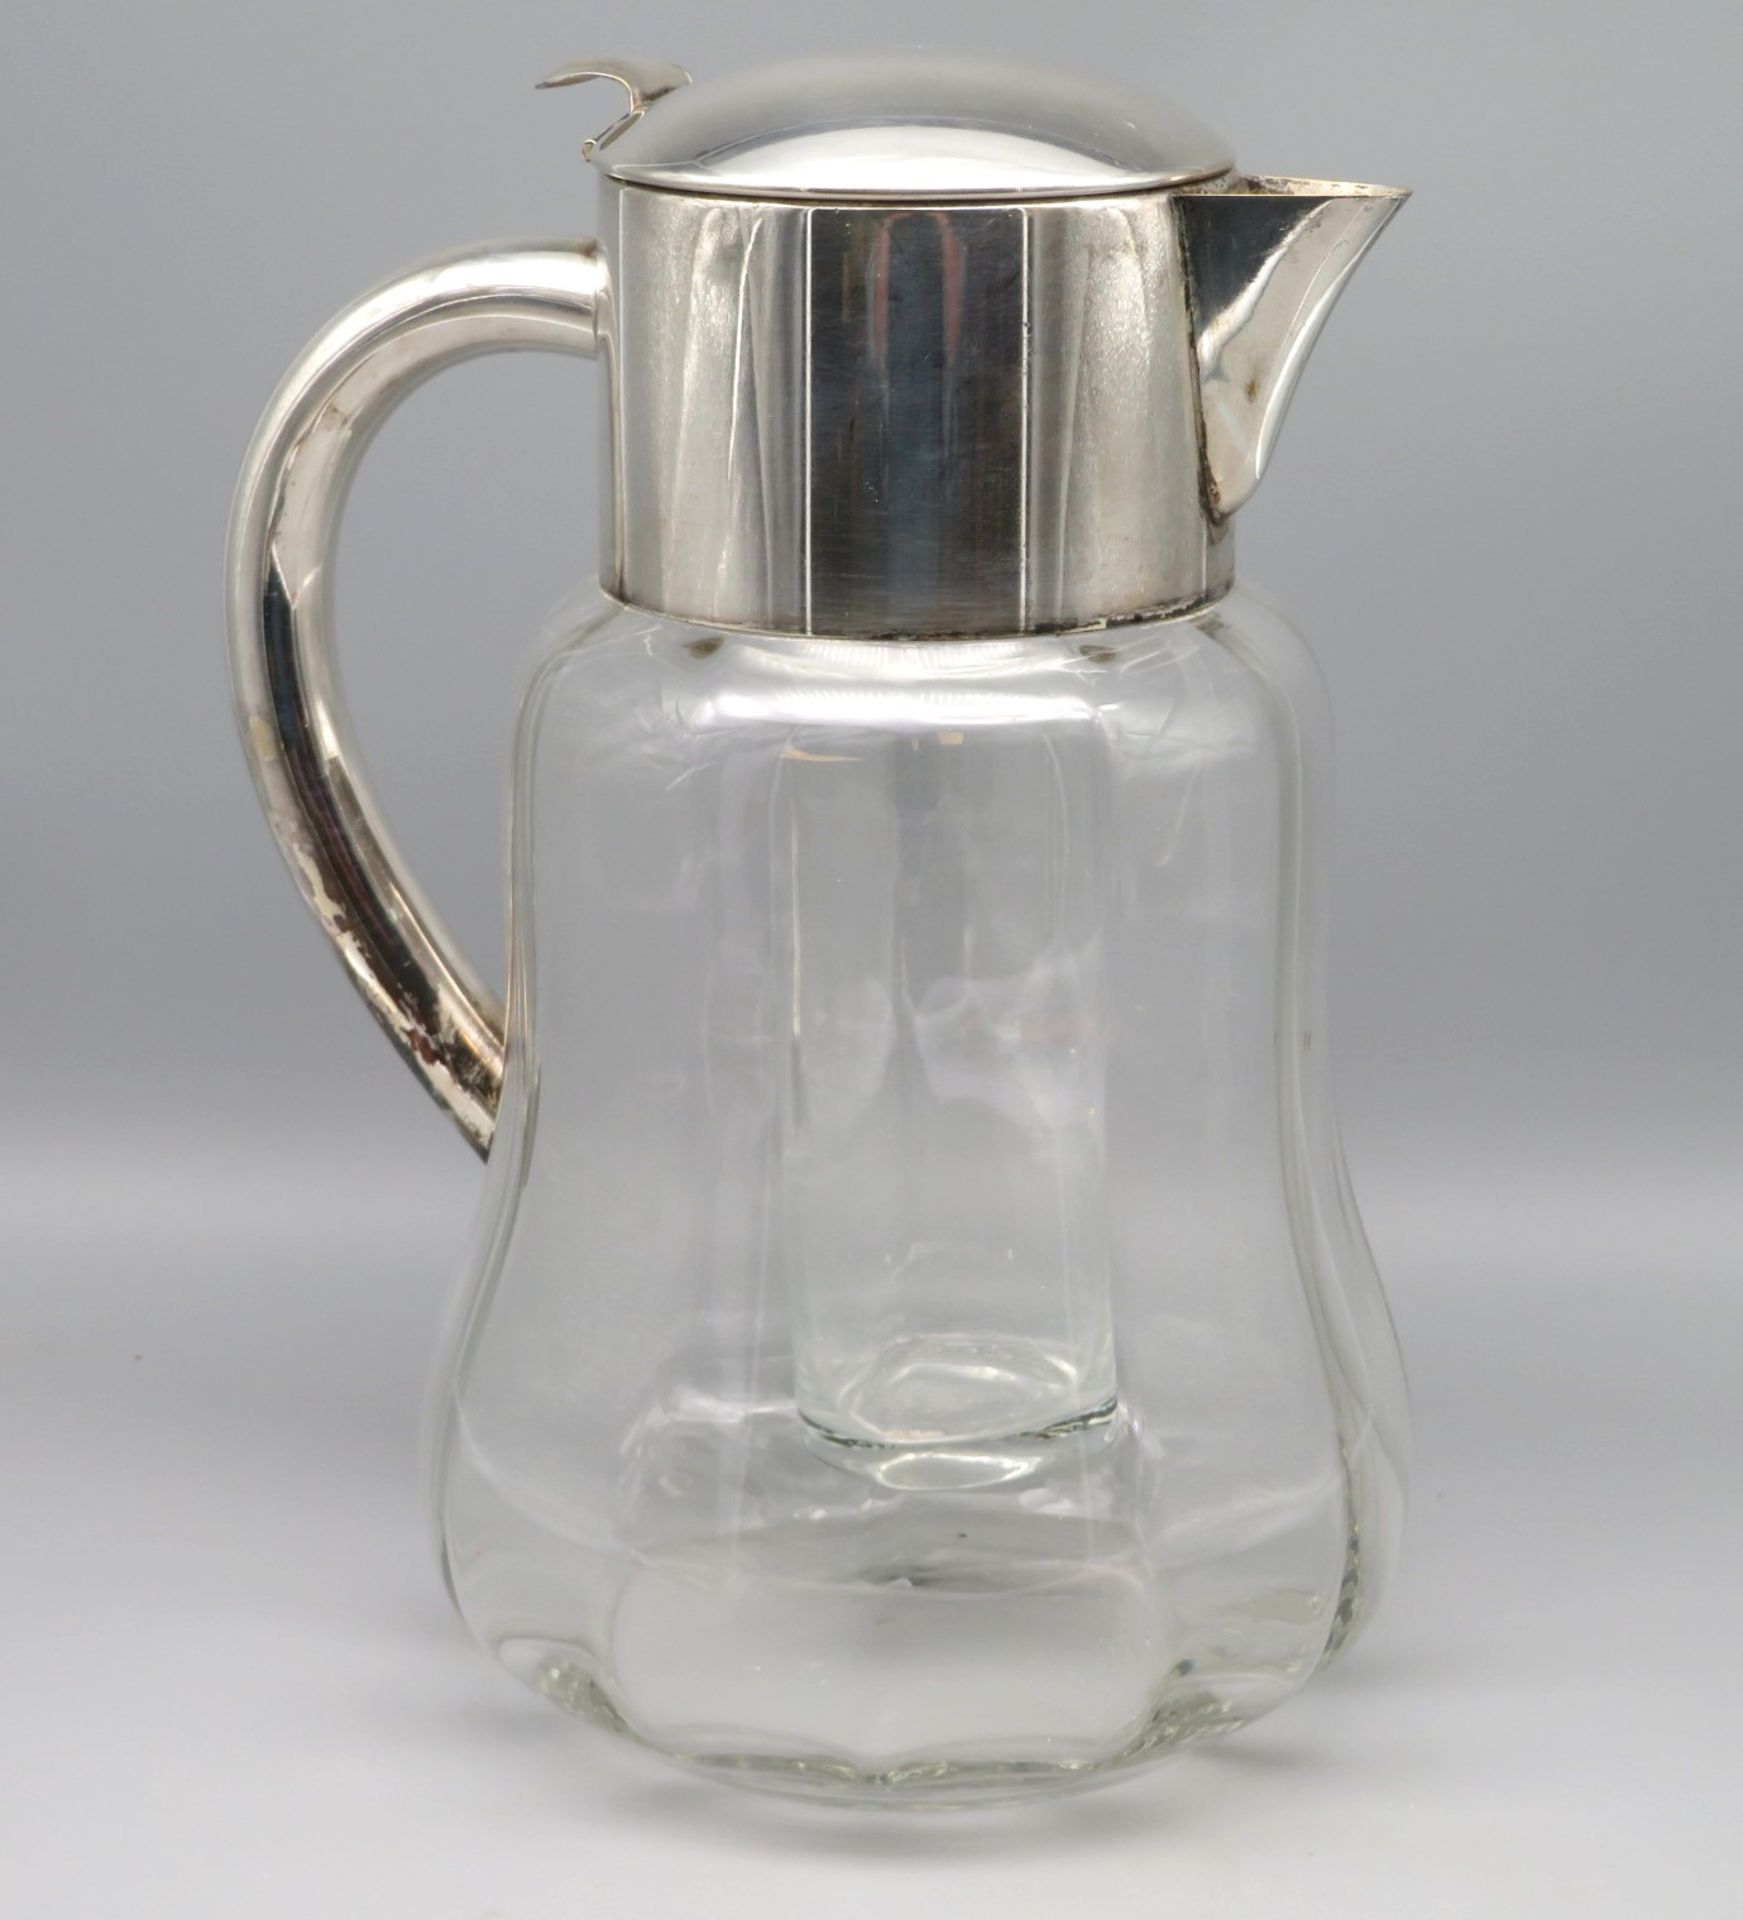 Saftkanne, sog. "Kalte Ente", farbloses Glas, versilberte Montur, Kühlglas vorhanden, h 28 cm, d 22